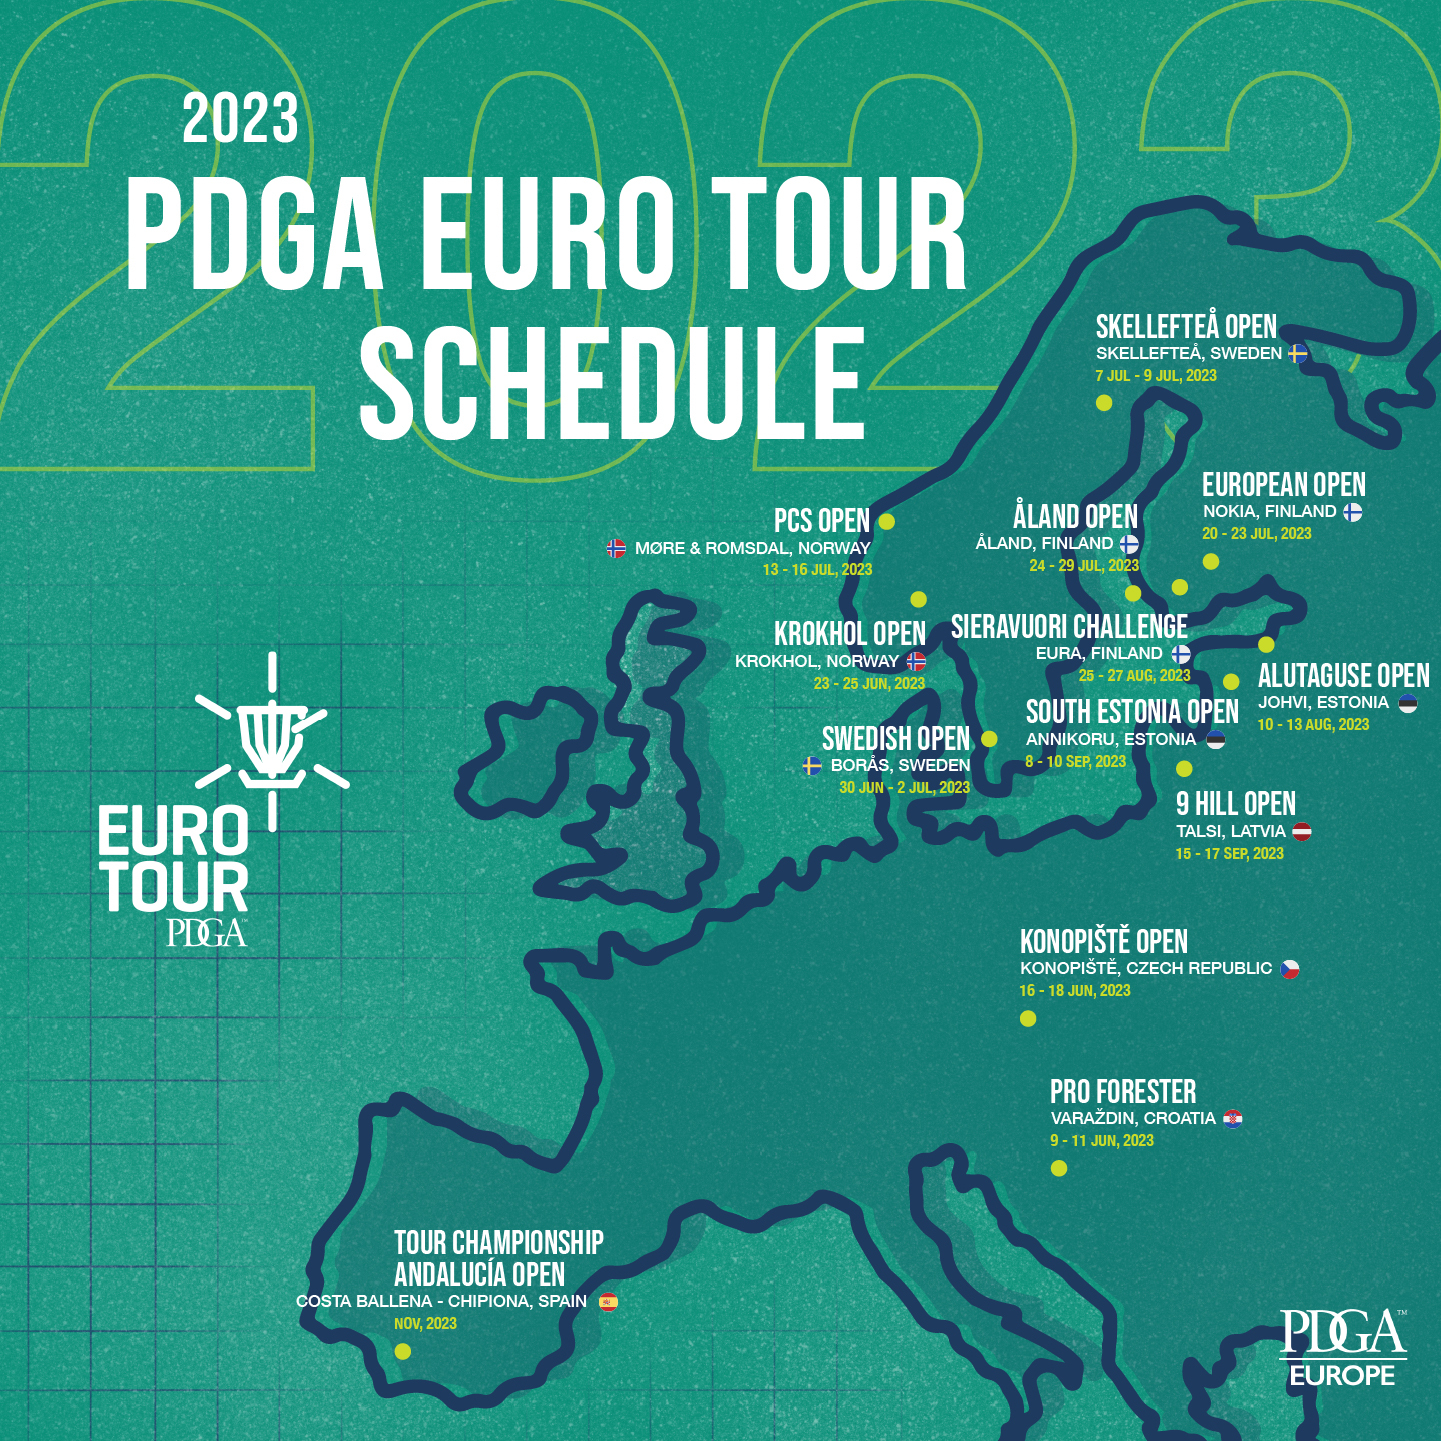 The 2023 PDGA World Championships